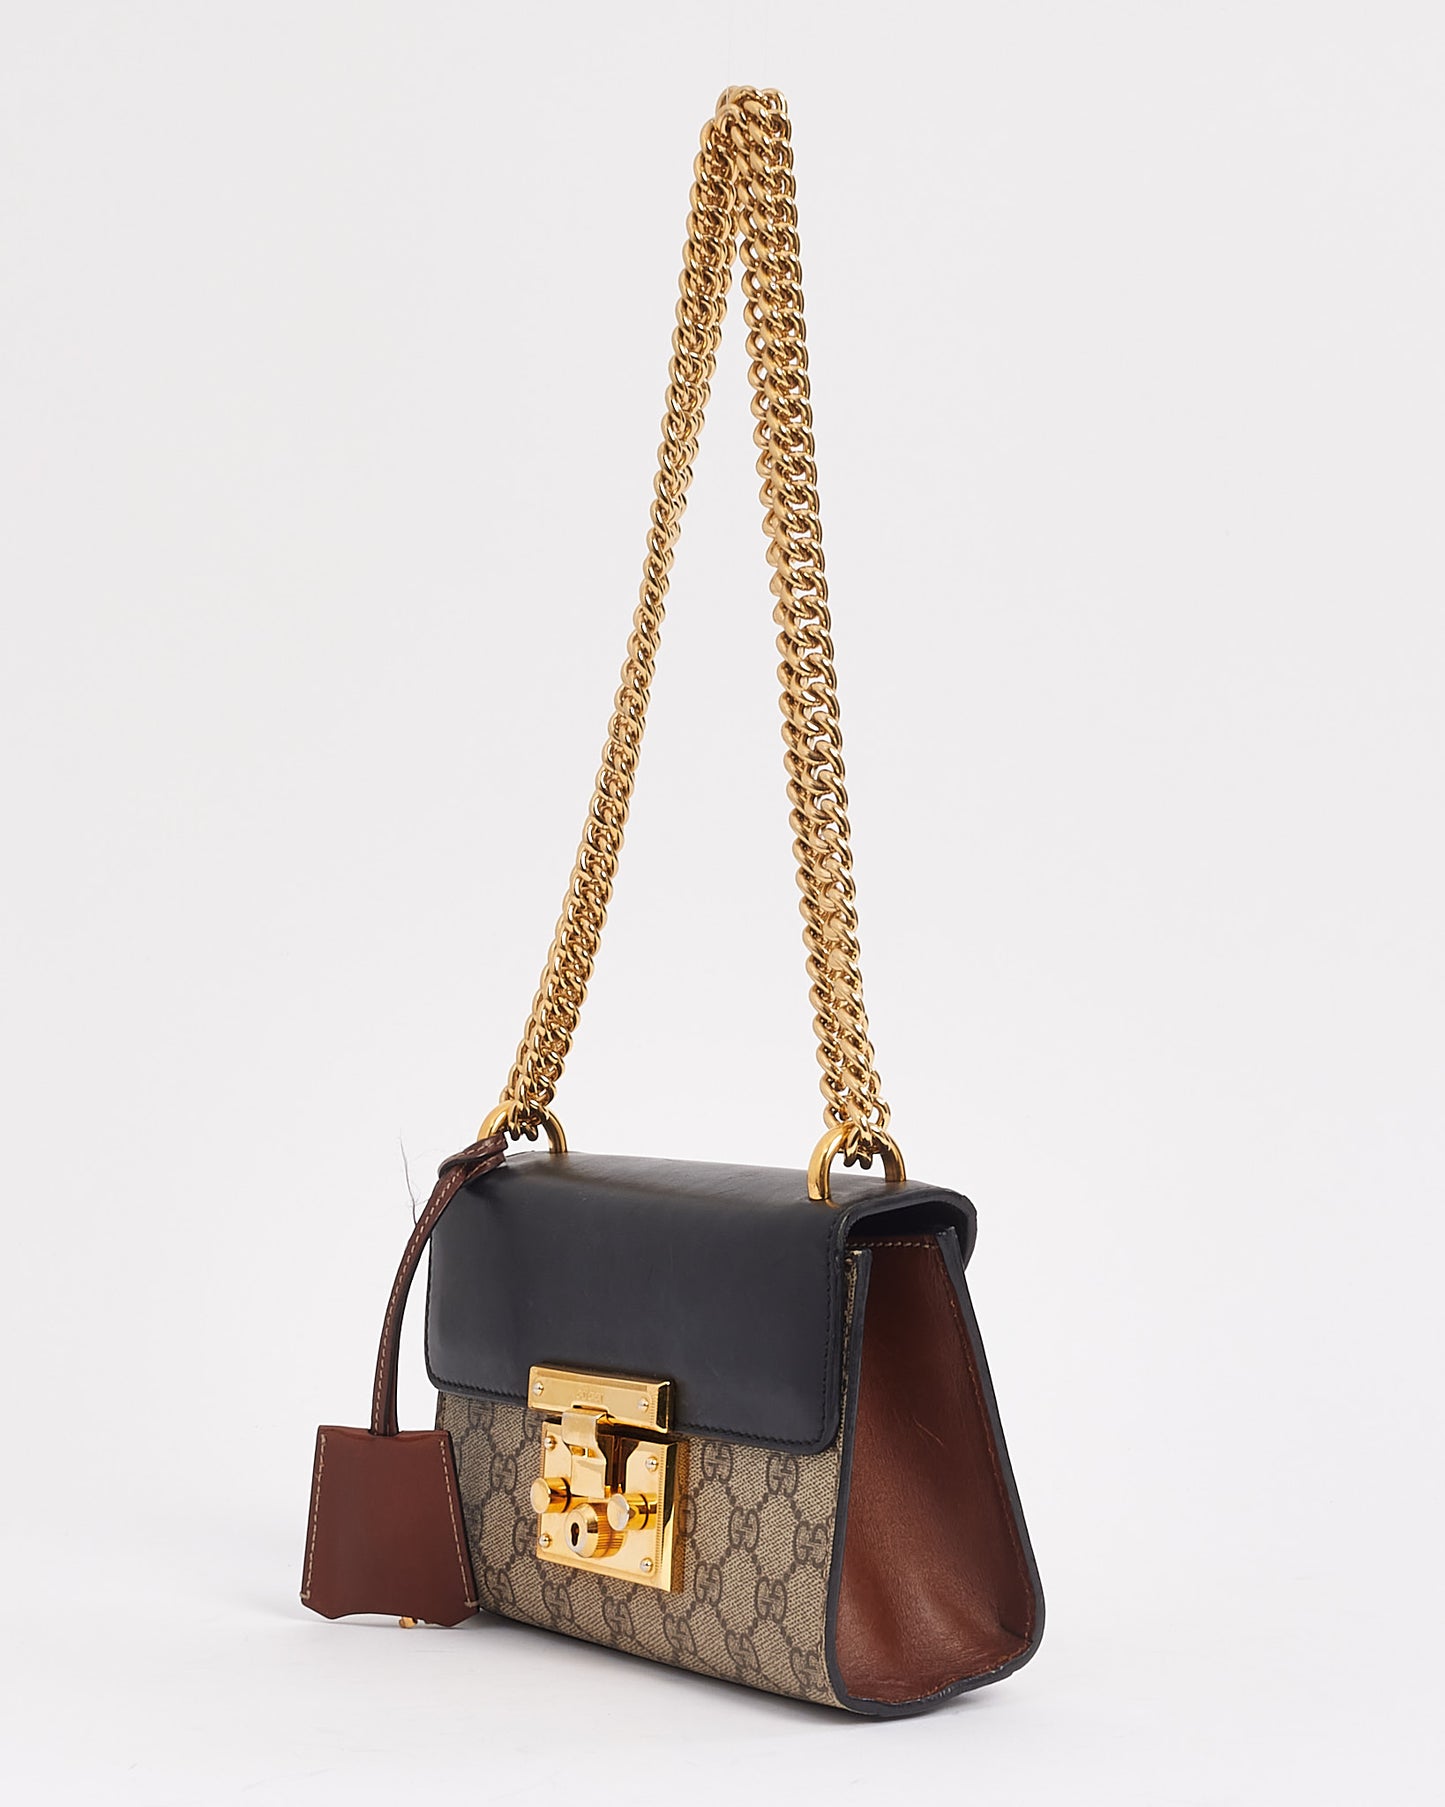 Gucci Black/Beige GG Supreme Canvas Small GG Padlock Shoulder Bag